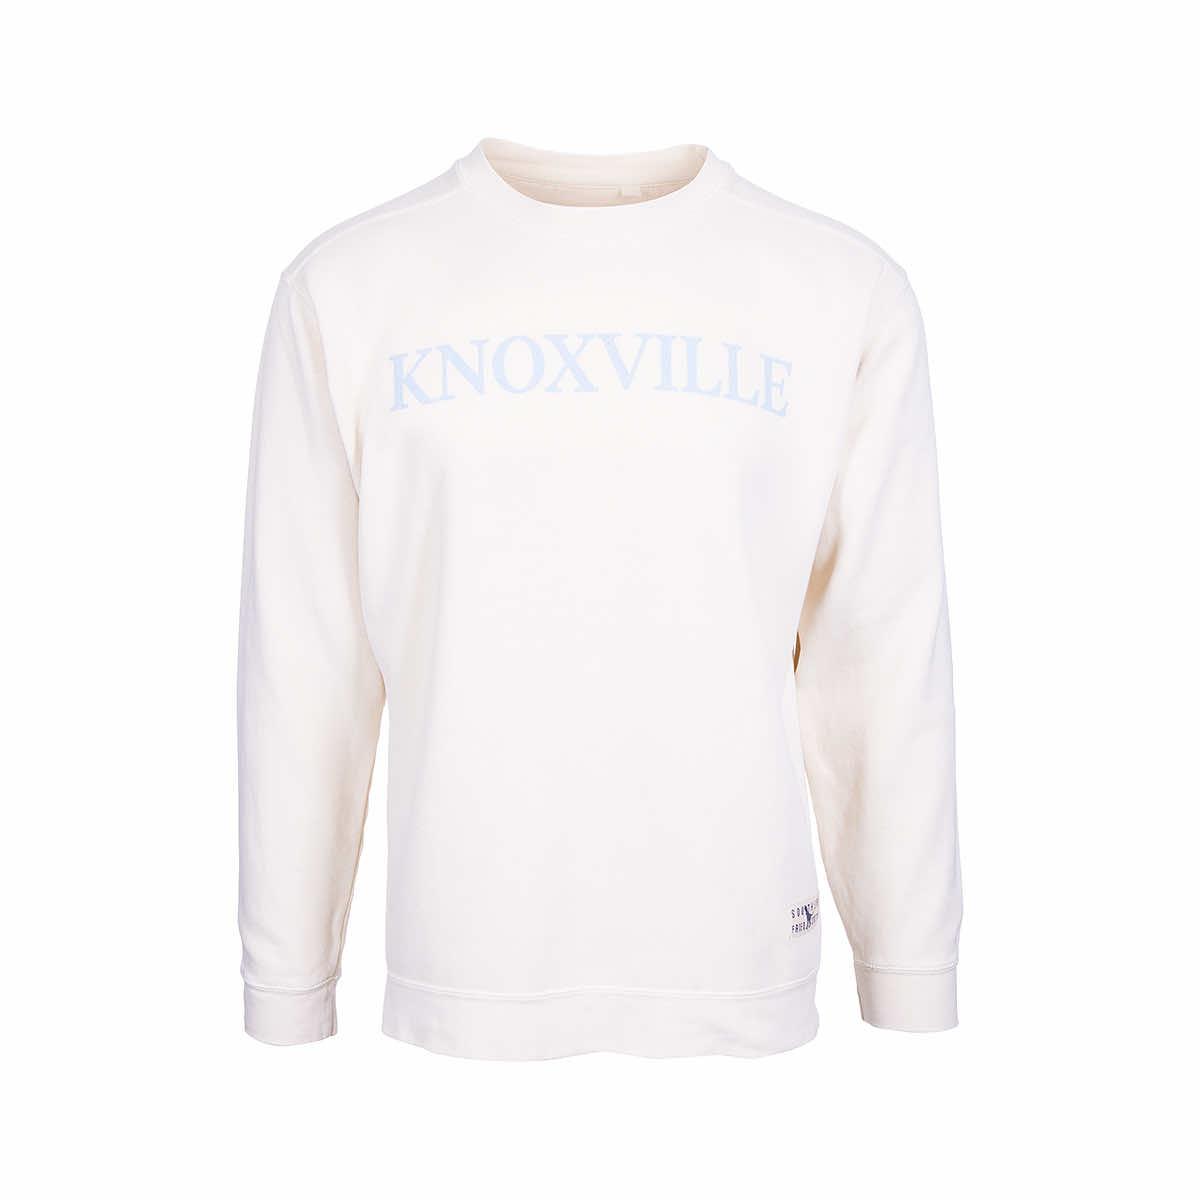 Mast General Store  Knoxville Comfy Crew Neck Sweatshirt